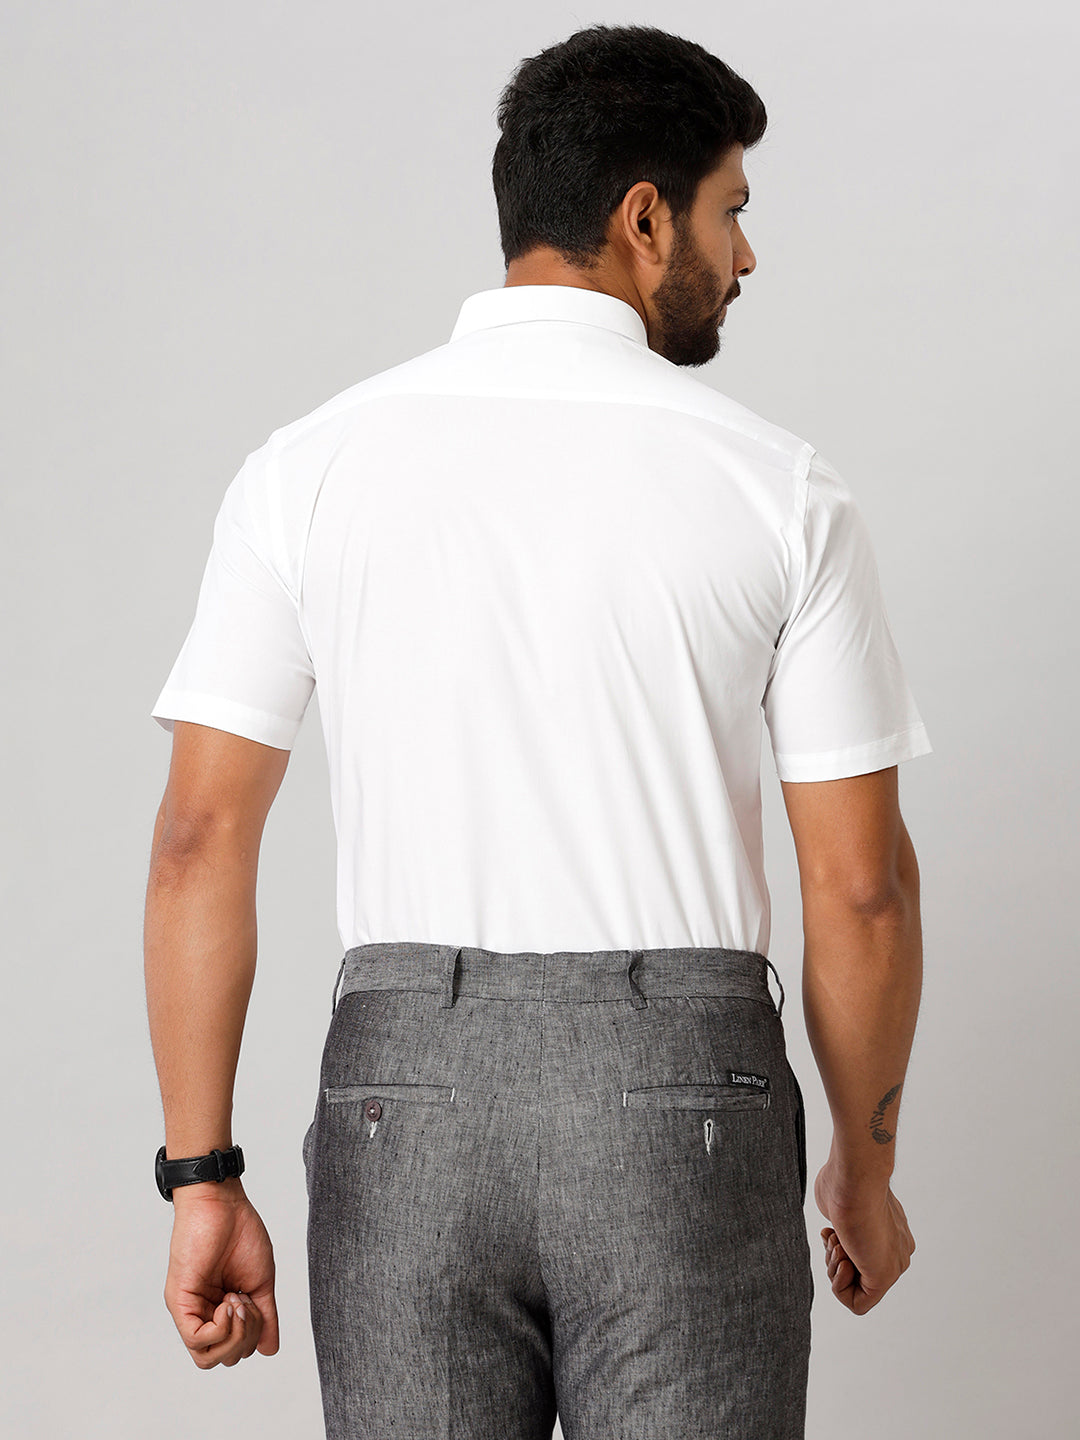 Mens Formal Cotton Spandex 2 Way Stretch White Half Sleeves Shirt-Back view